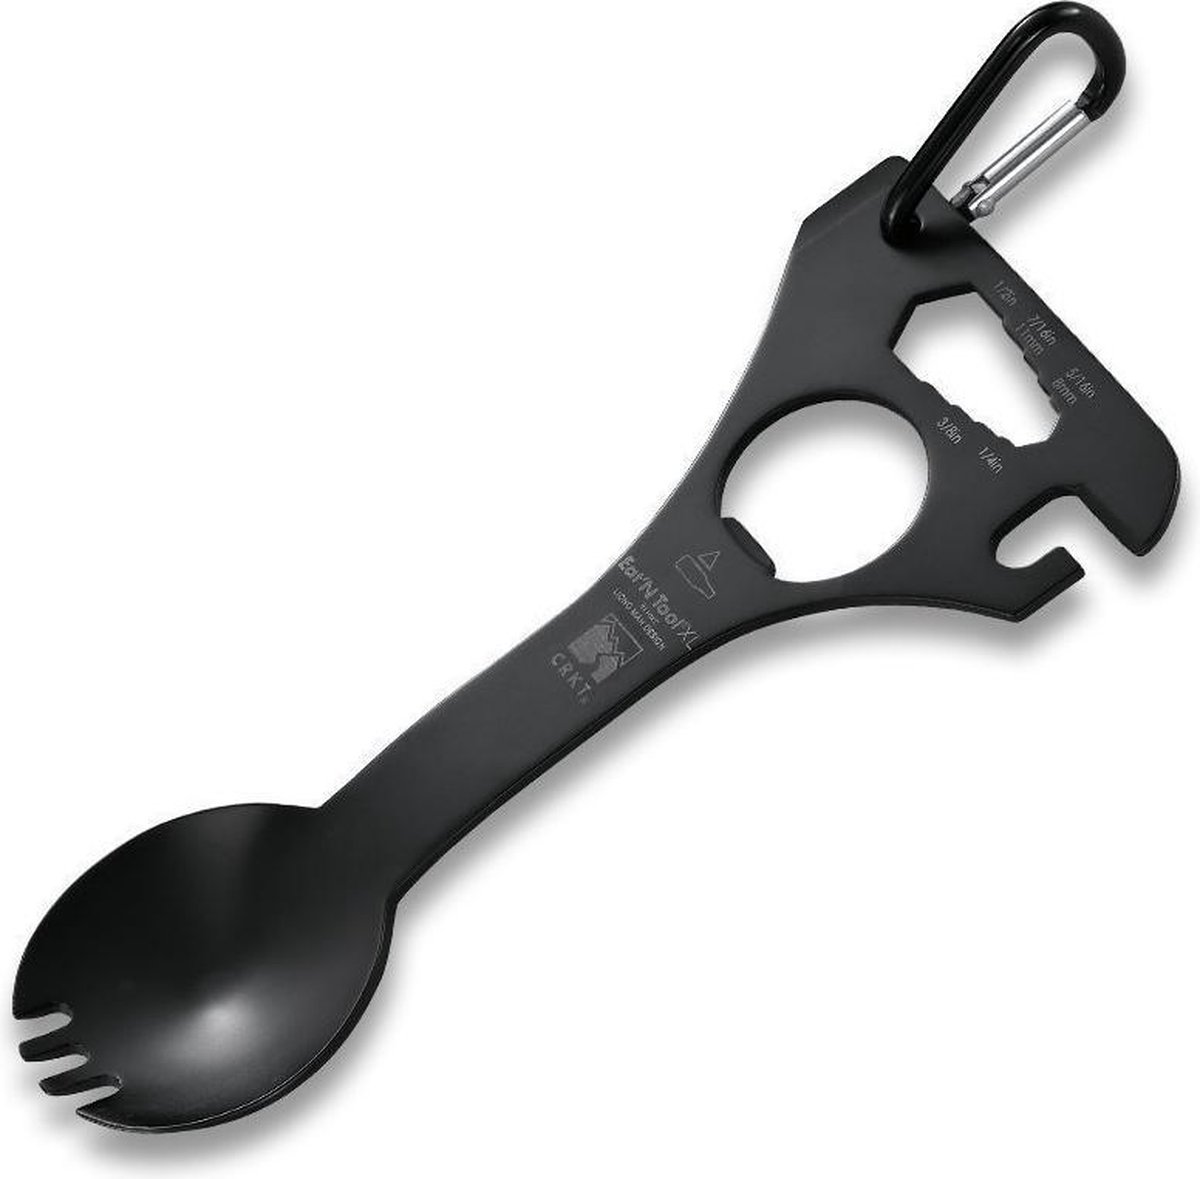 Eat'n tool XL black